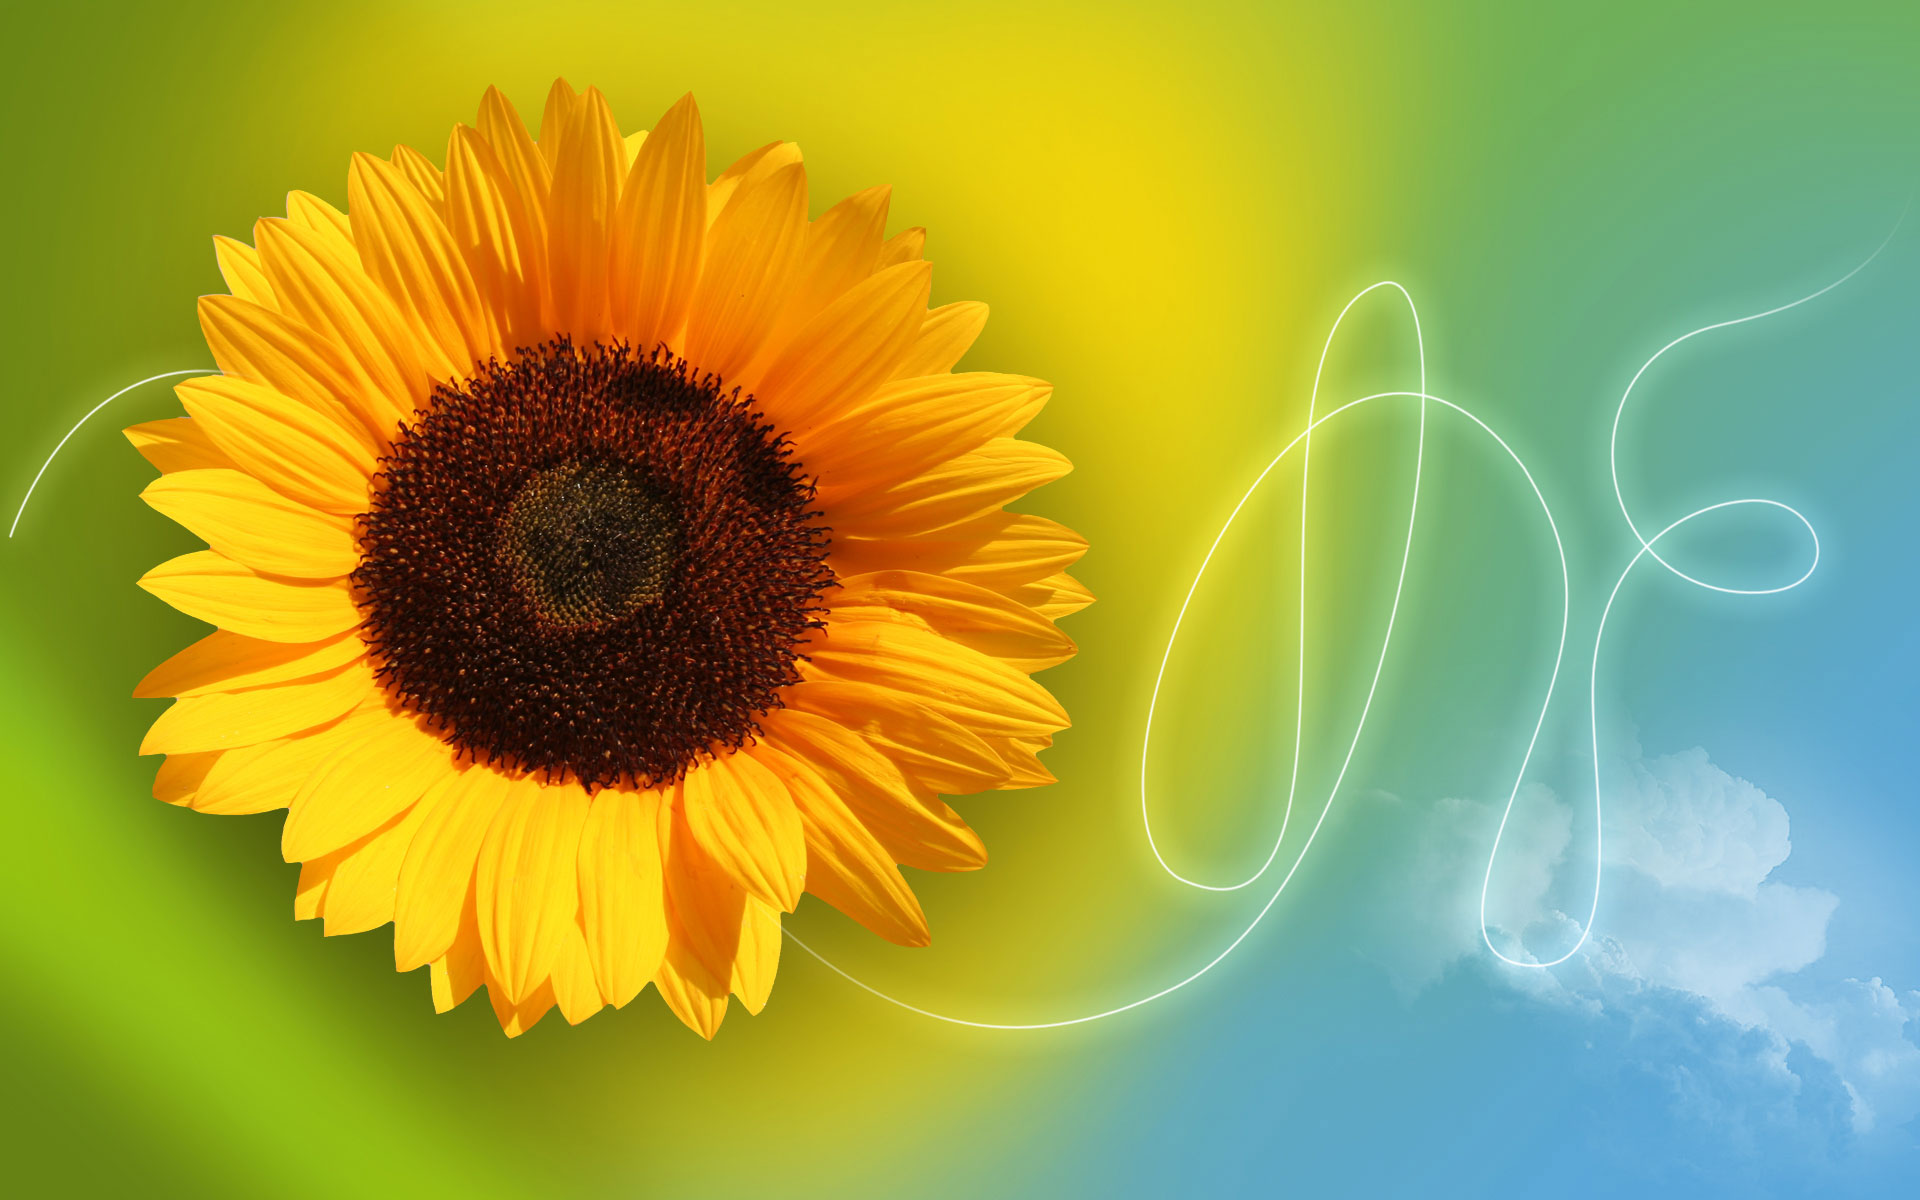 Sunflower Wallpaper Image Adobe Photoshop Photo